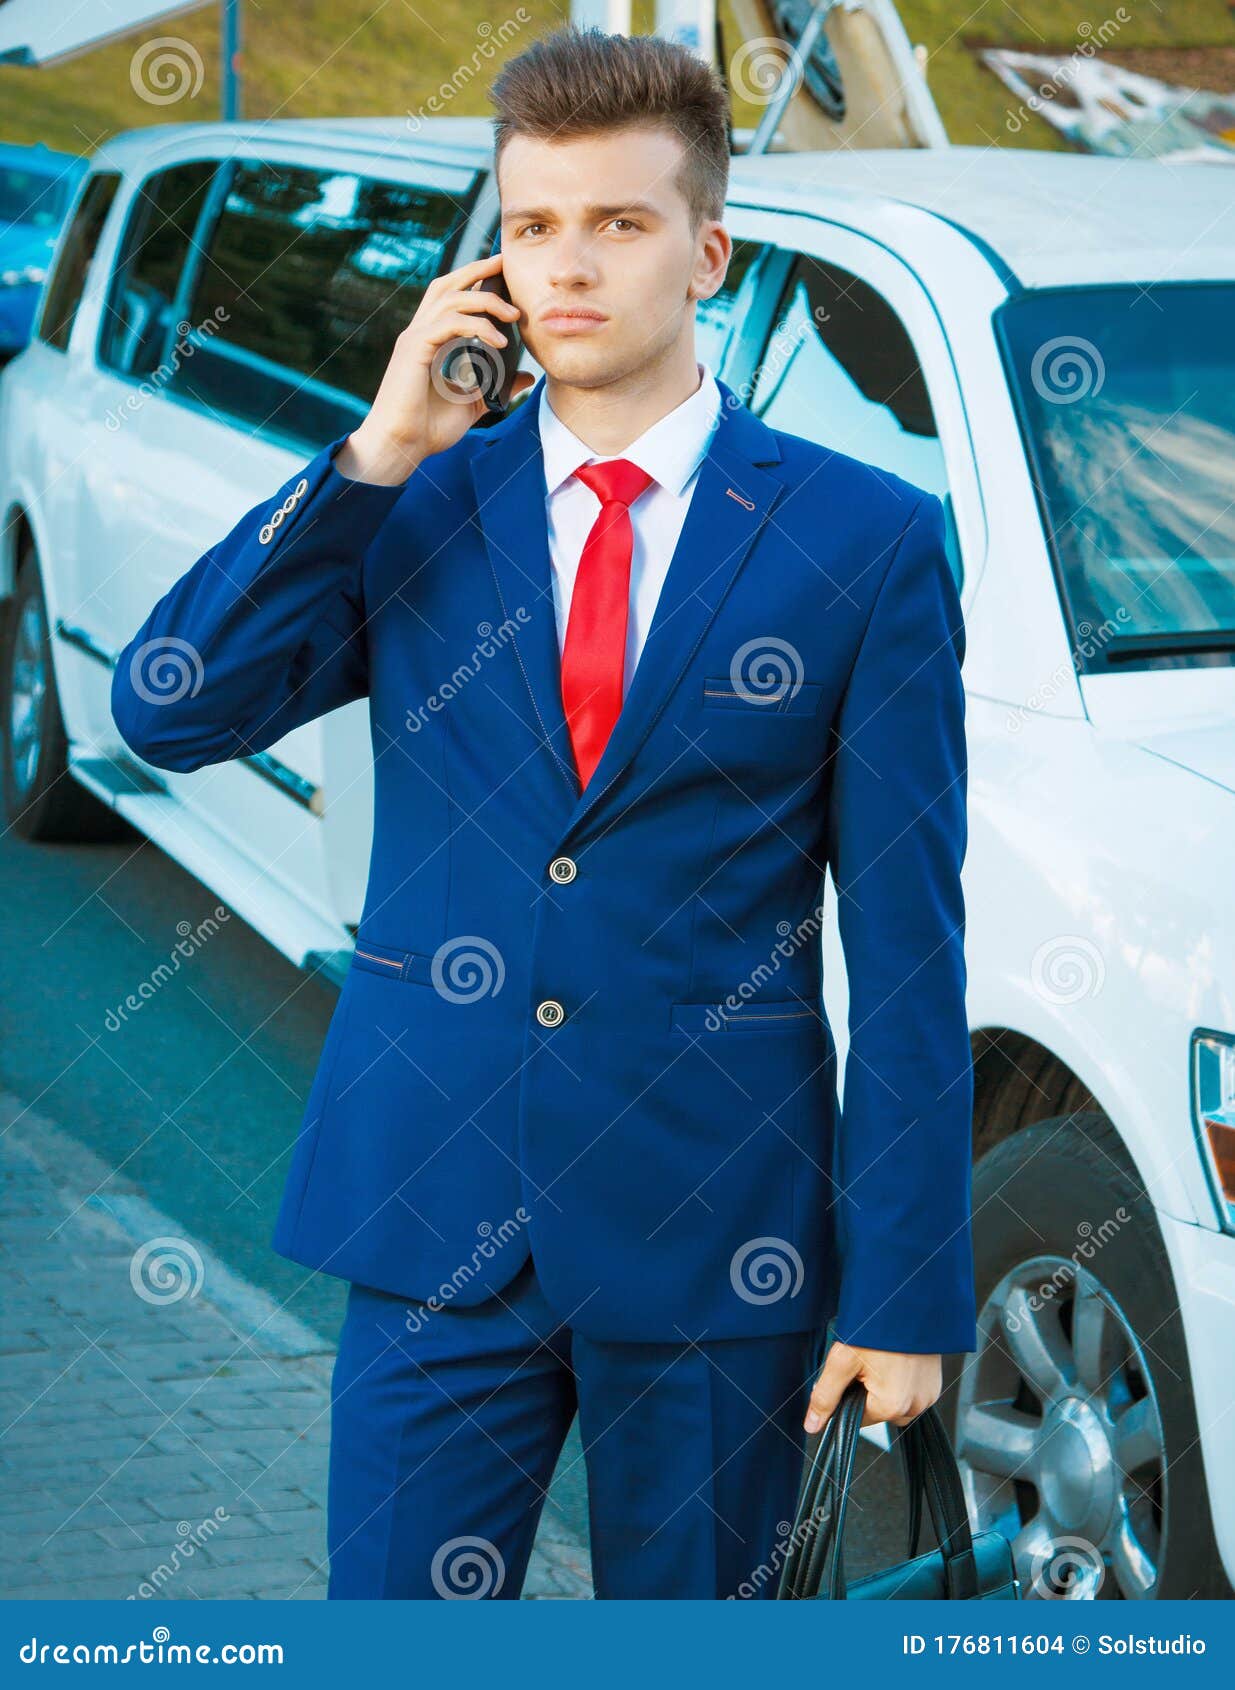 Business man near the car stock photo. Image - 176811604